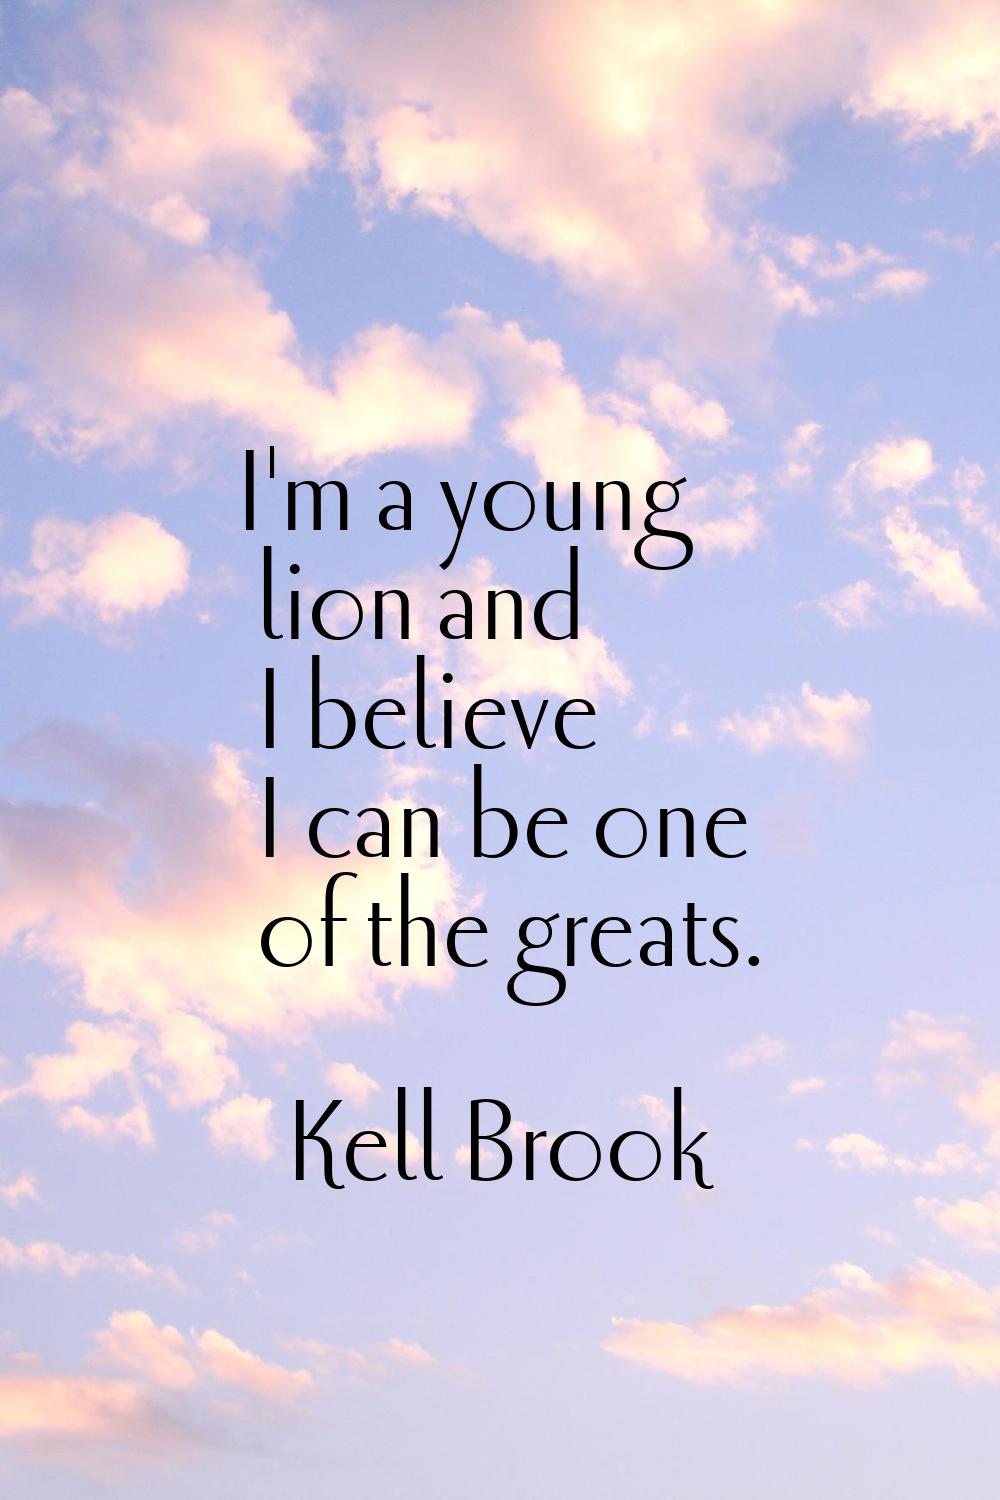 I'm a young lion and I believe I can be one of the greats.